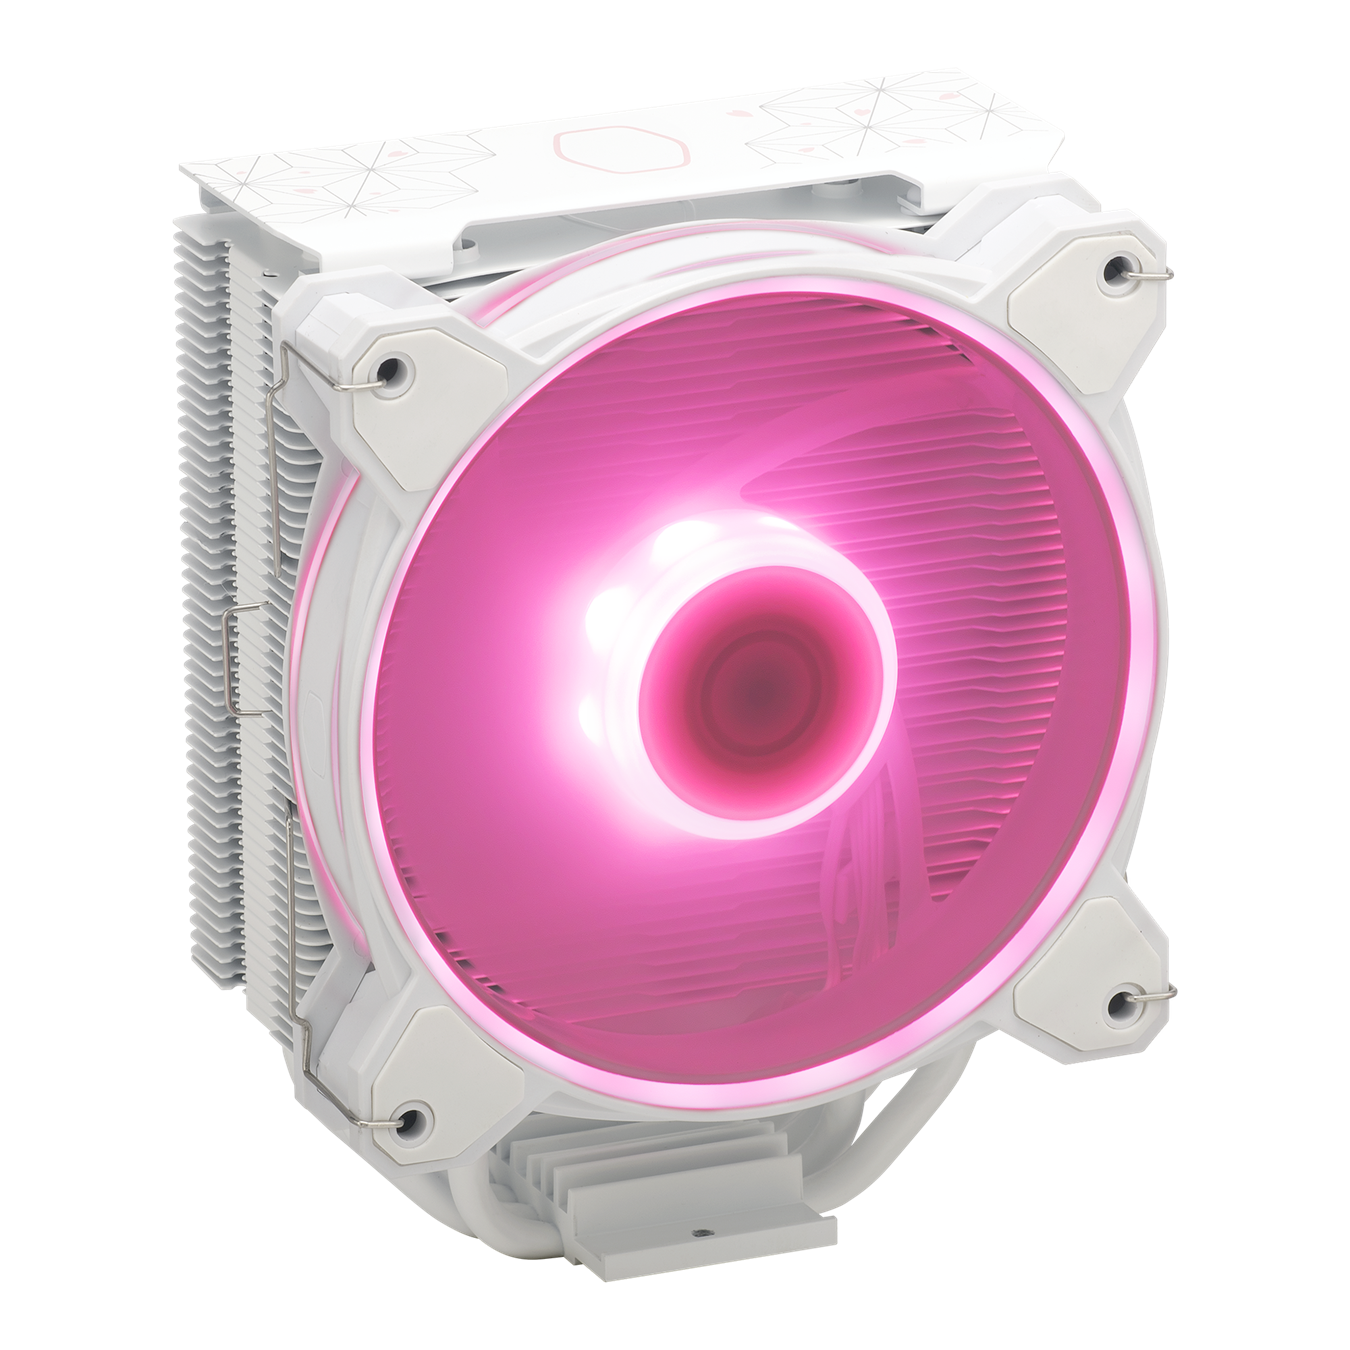 Hyper 212 Halo White Sakura Limited Edition - ARGB Lighting Photo 2